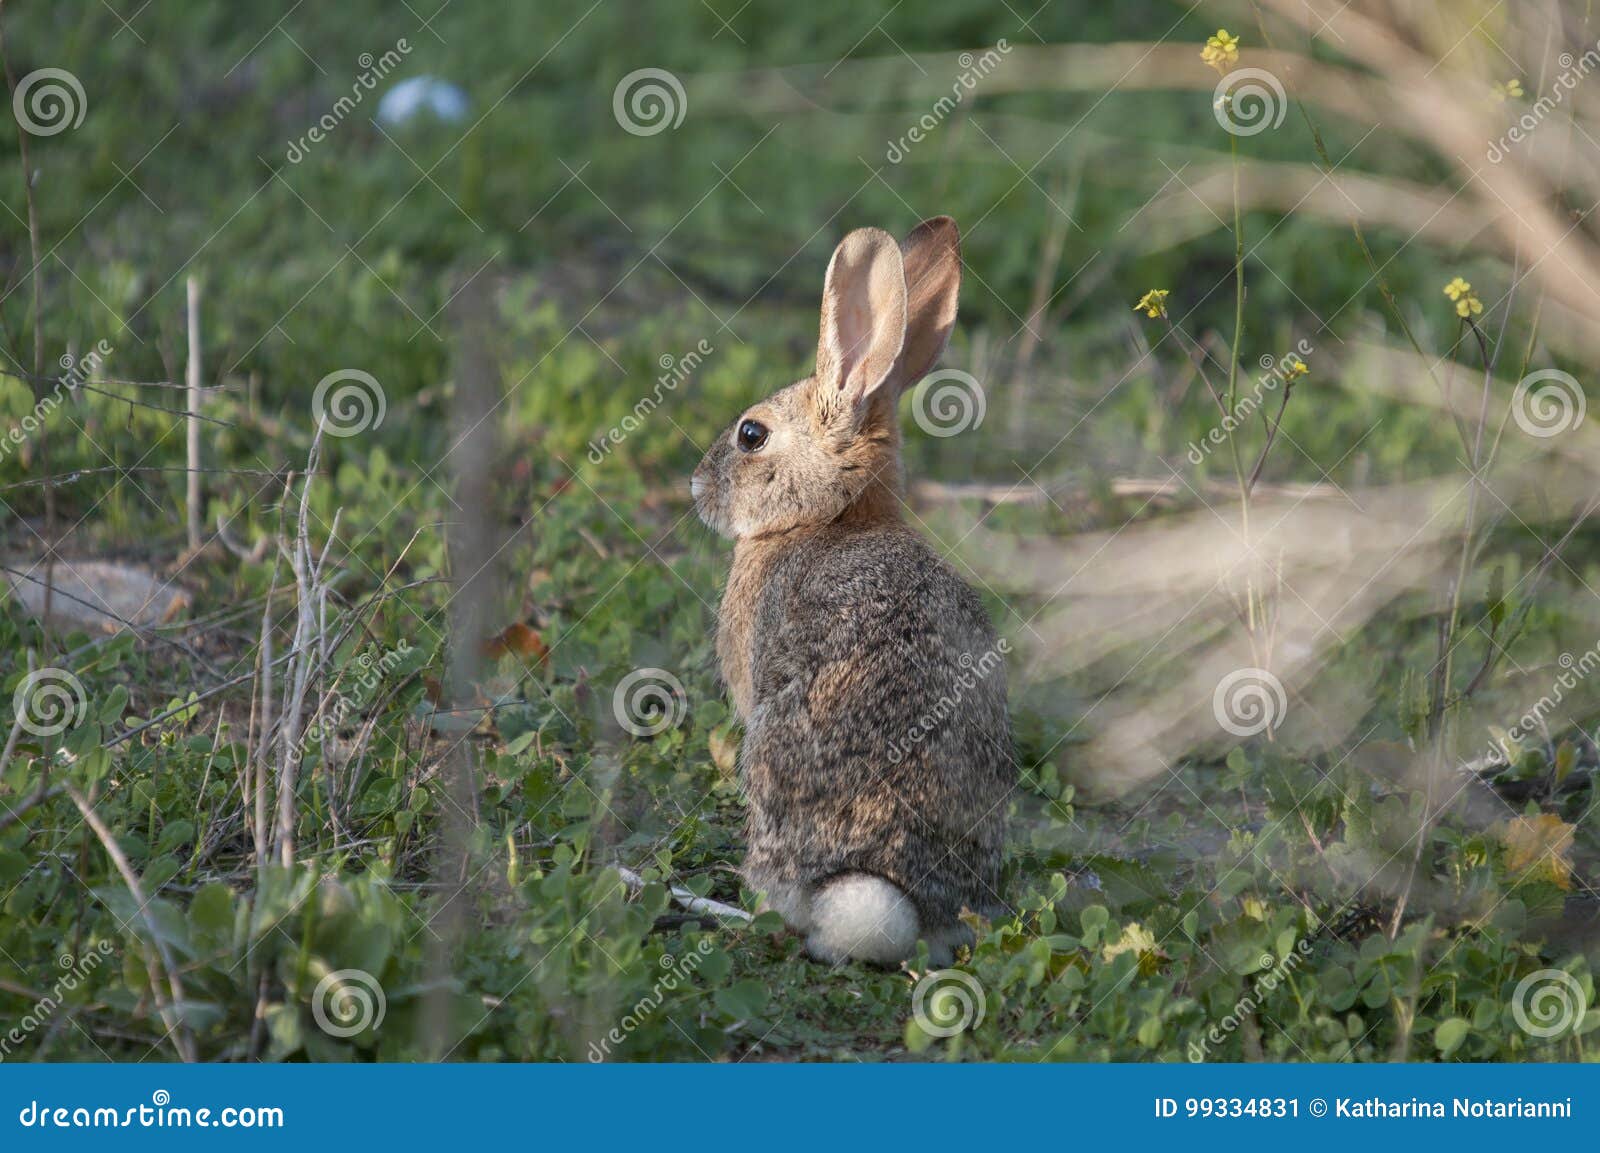 desert cottontail rabbit sylvilagus audubonii in the meadow